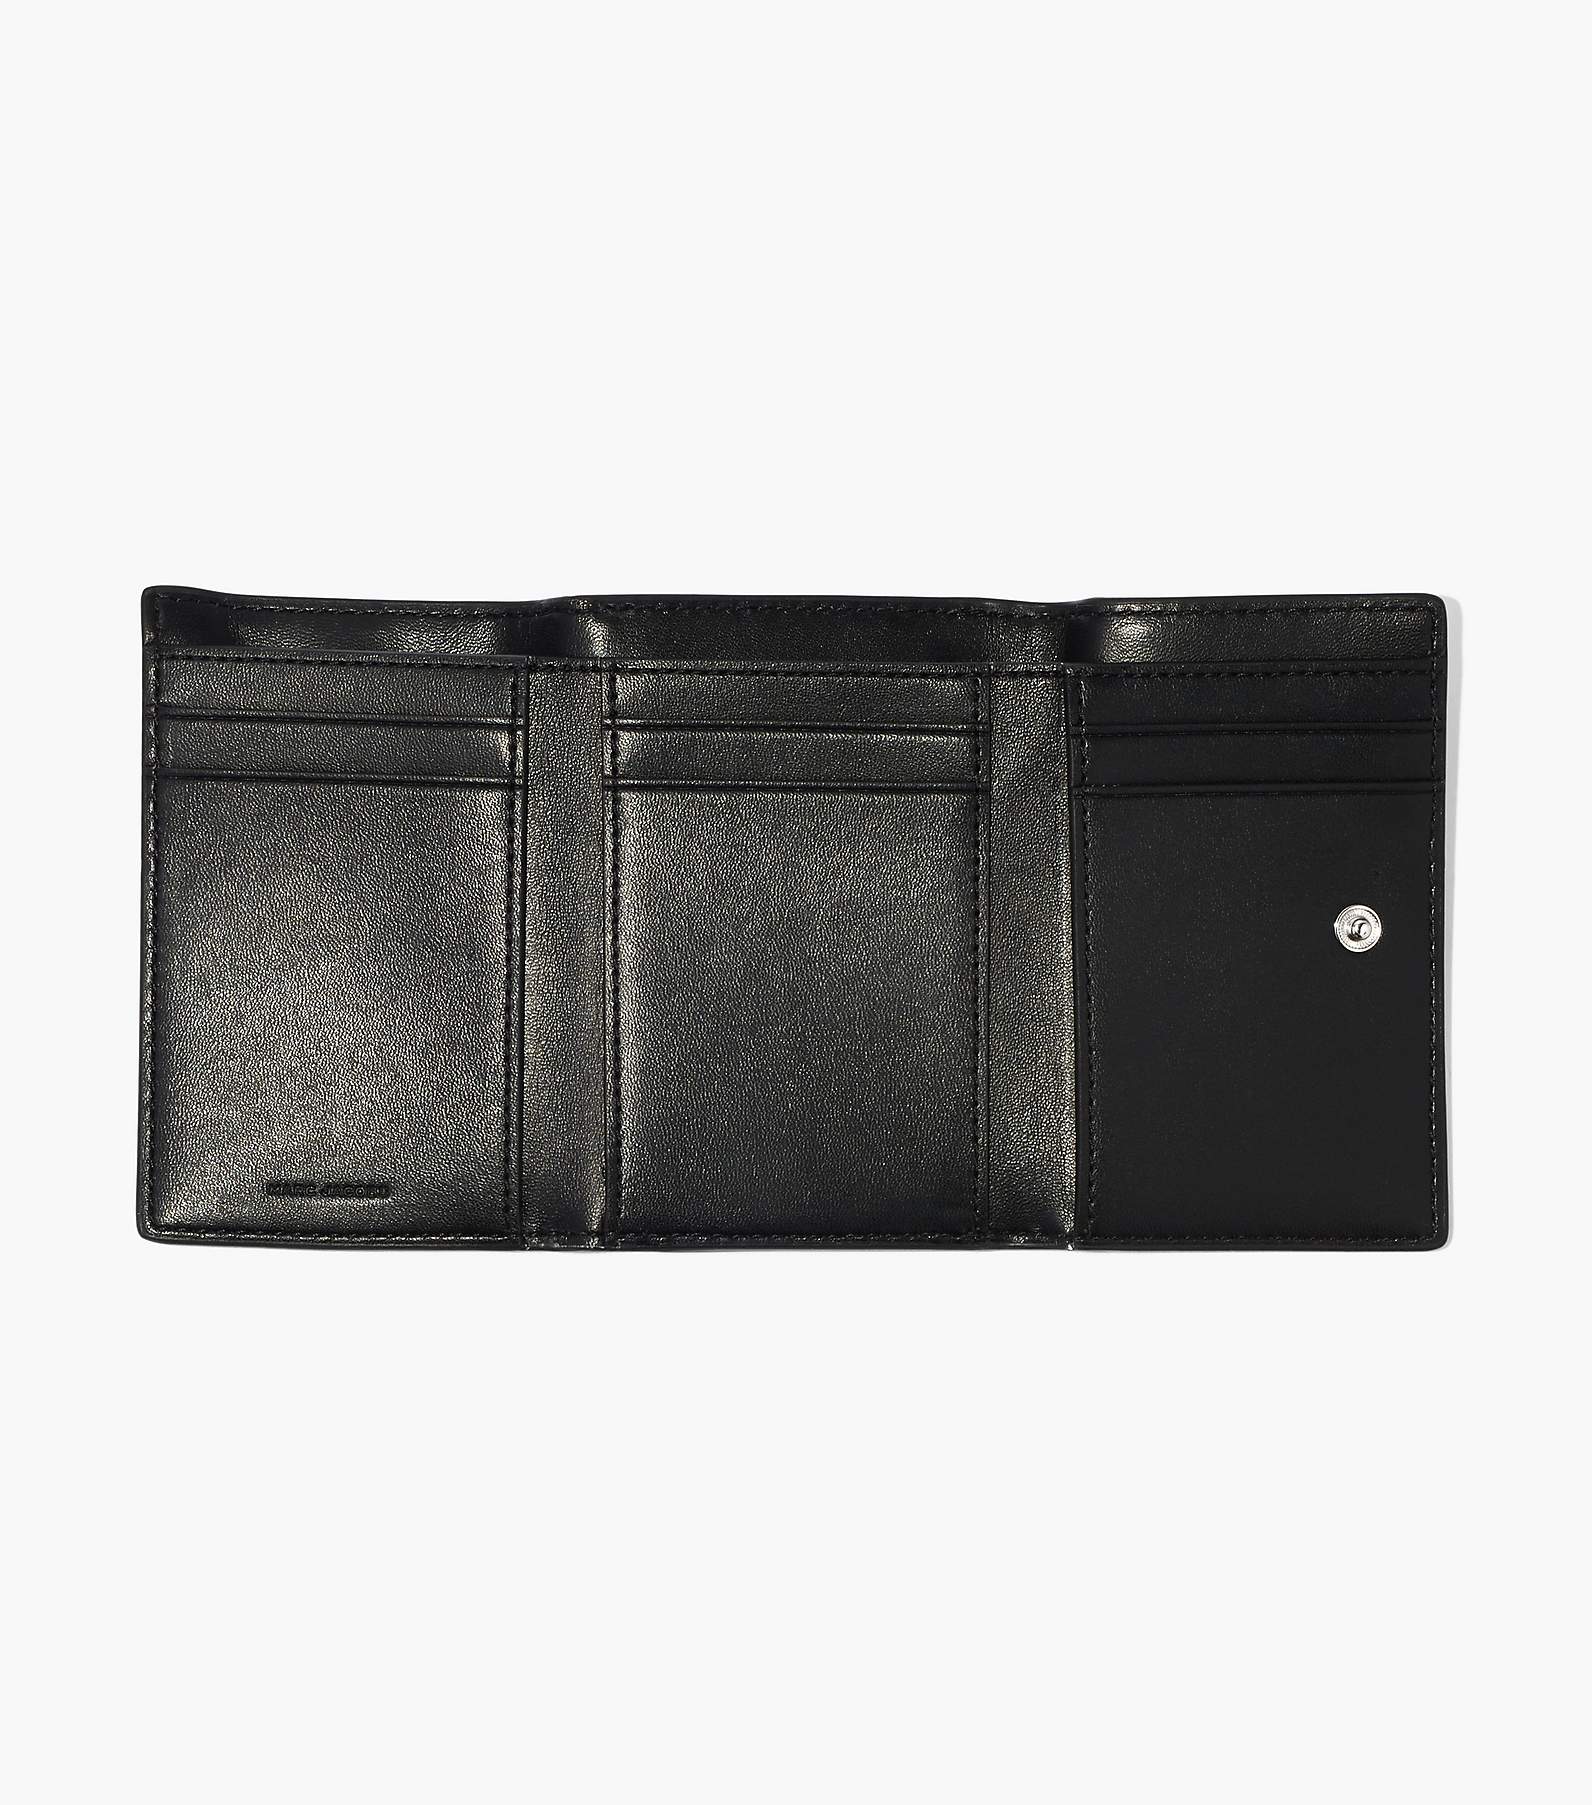 The Monogram Medium Trifold Wallet in Black/White